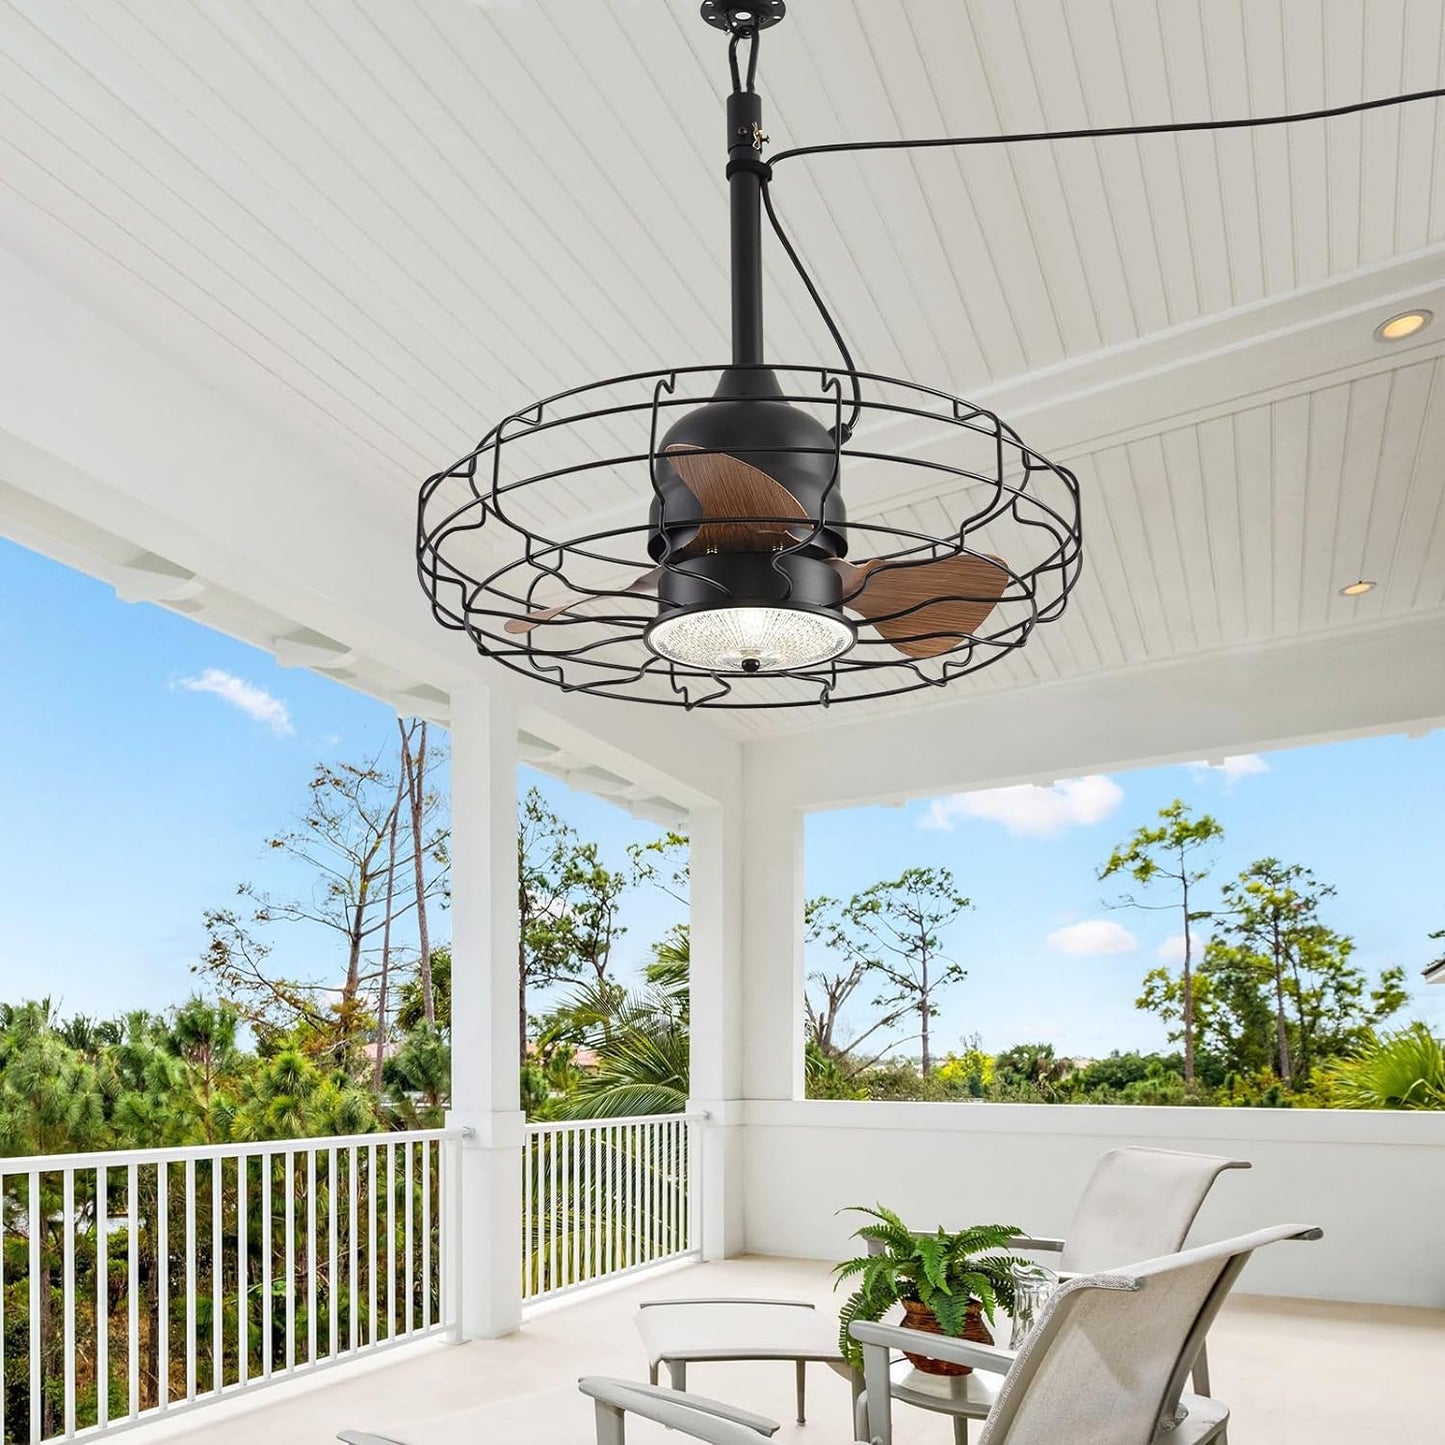 KINDLOV Outdoor Ceiling Fan with Light, 21'' Moisture Resistant Gazebo Fan, Plug-in Cage Ceiling Fan Light,Suitable for Decks, Canopies, Adjustable 3 Colours LED Lights, Black